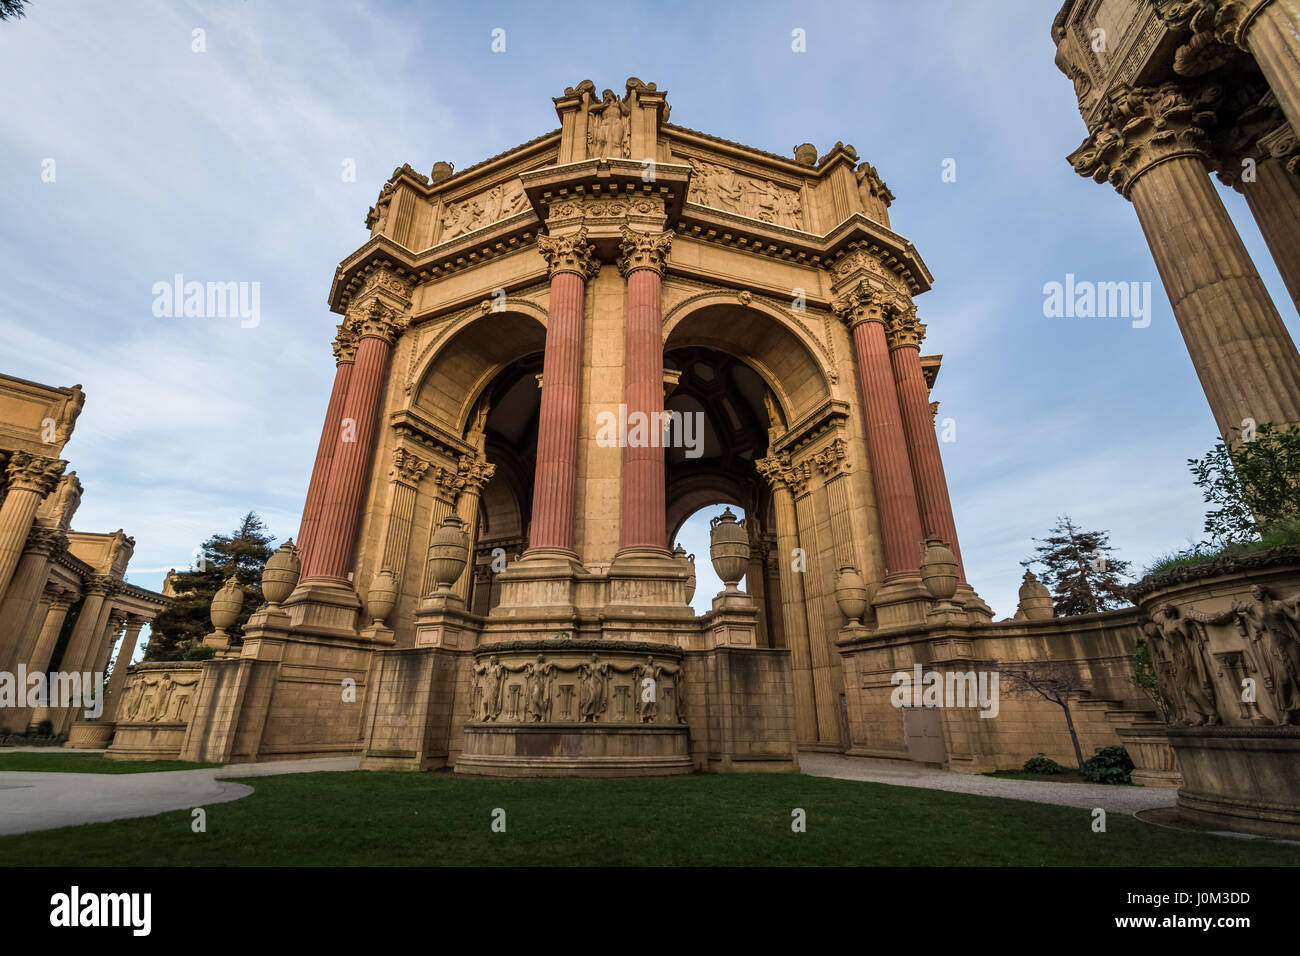 The Palace of Fine Arts - San Francisco, California, USA Stock Photo